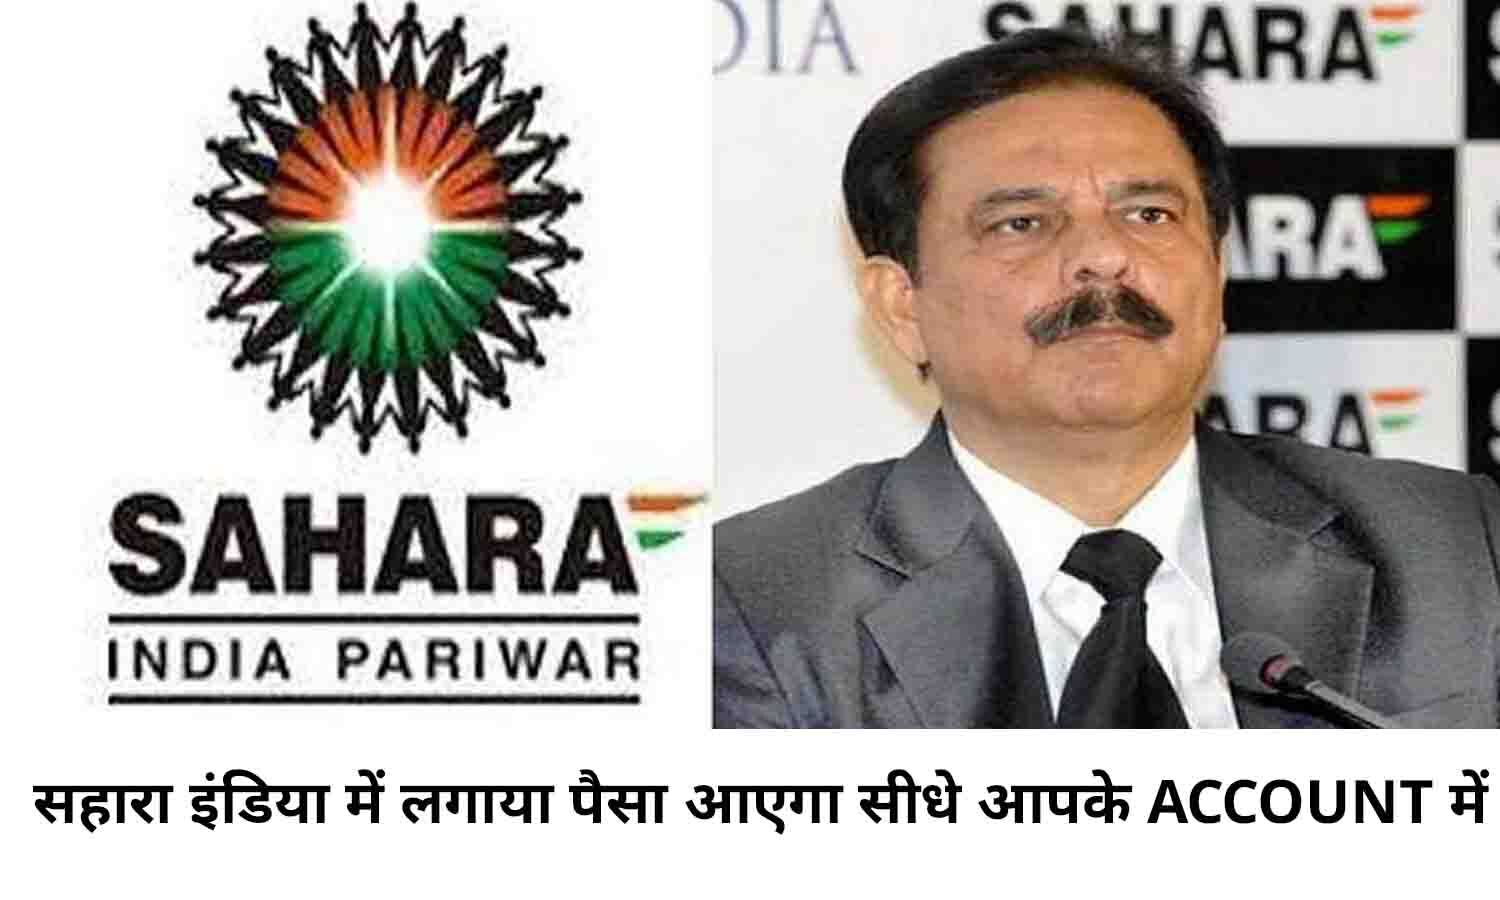 Sahara India News Ke Baare Mai